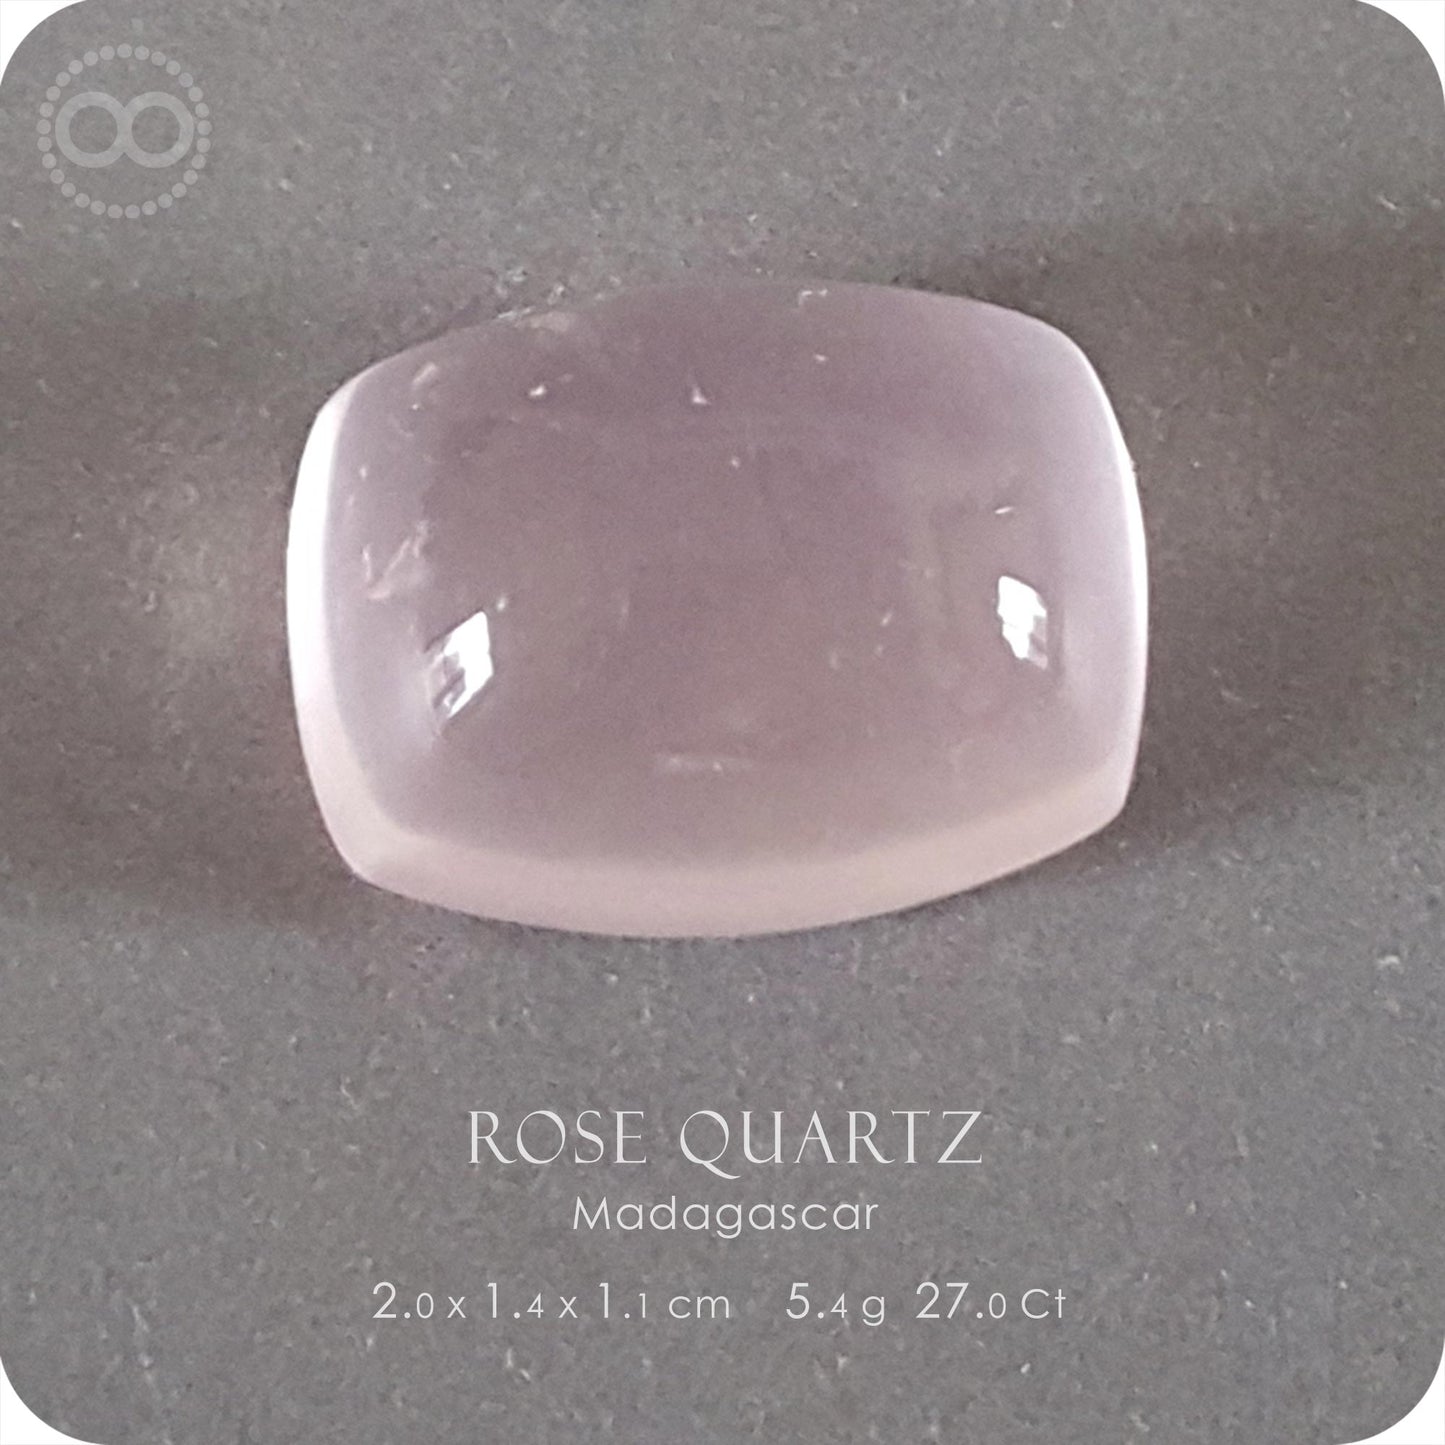 Gem Star Rose Quartz 微星光粉晶寶石 Silver Necklace - H219